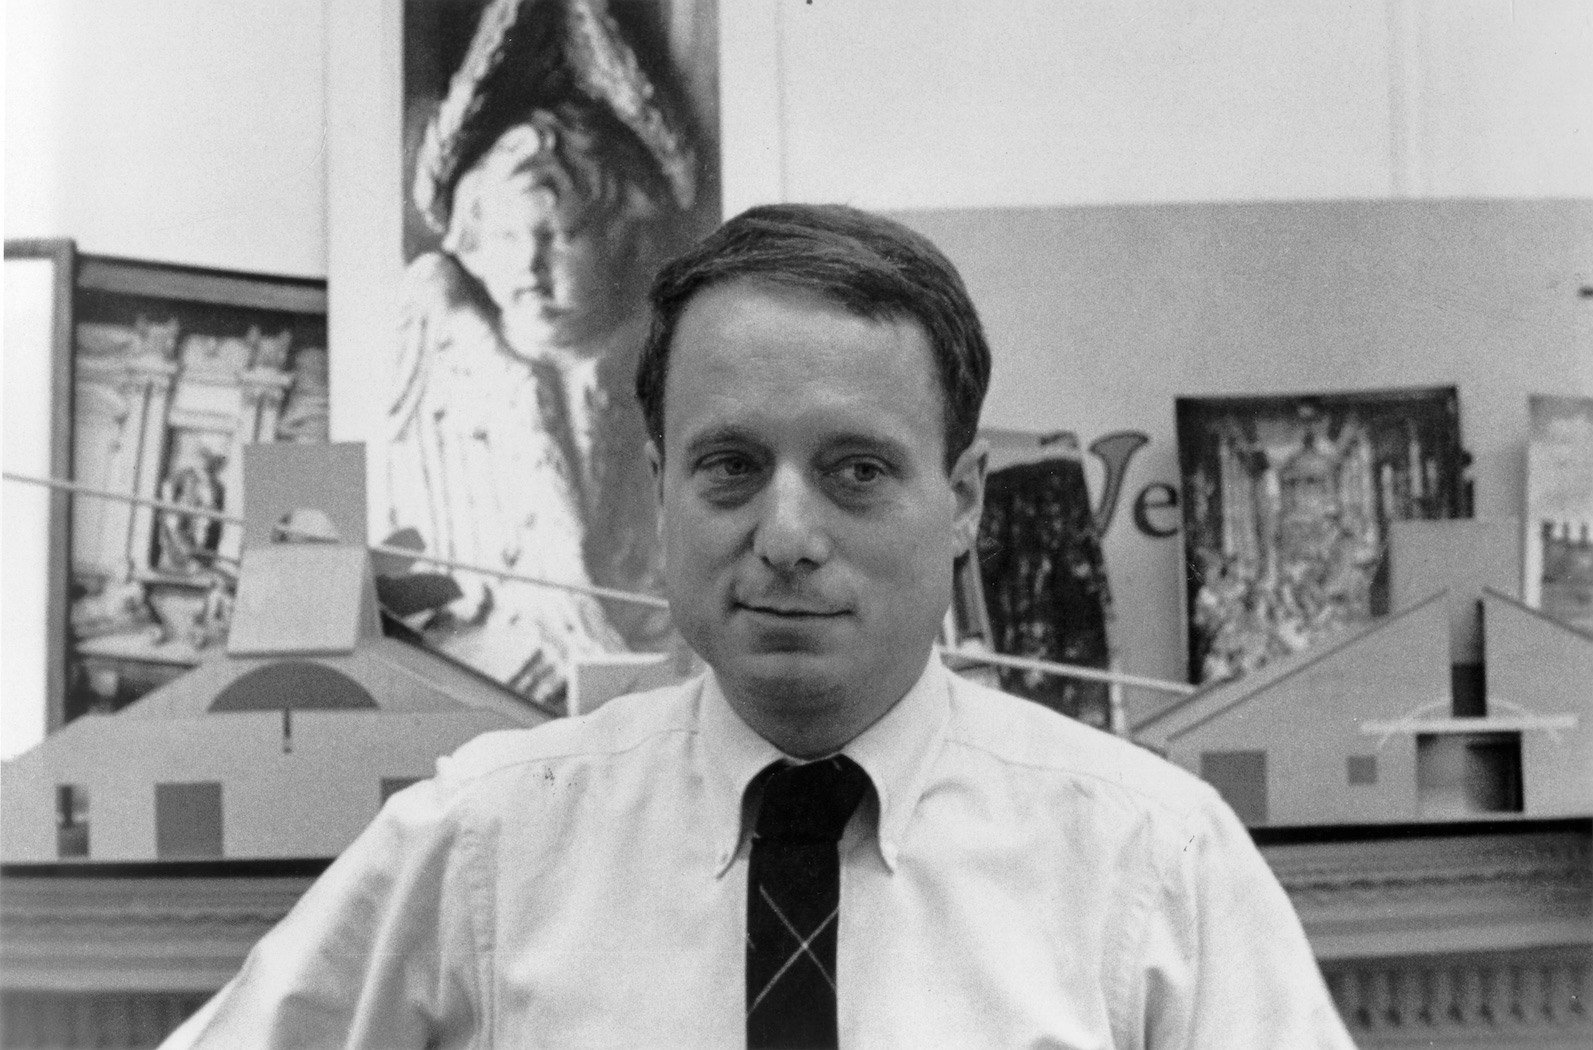 Robert Venturi (1925-2018)